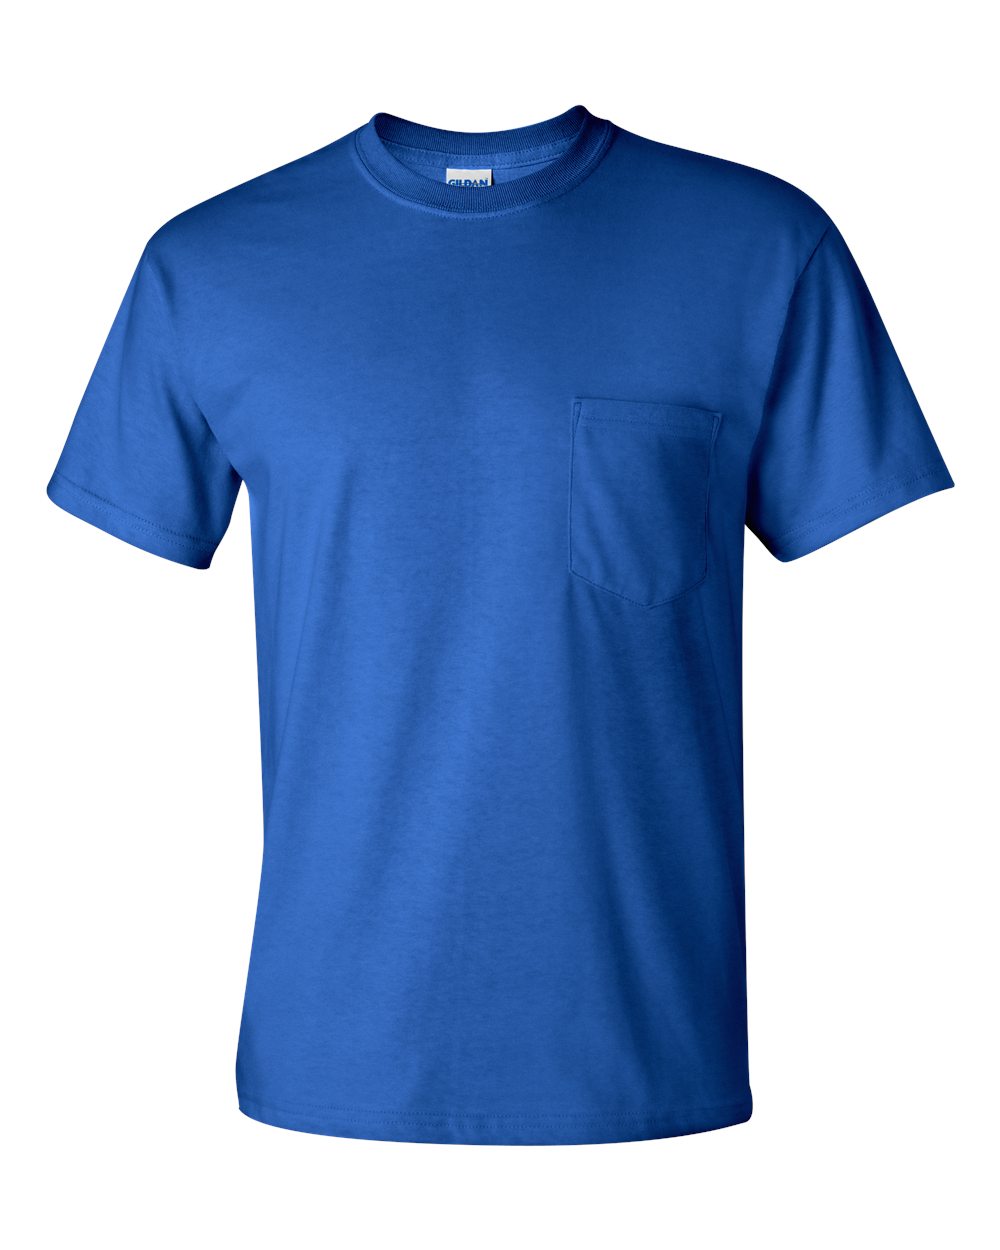 Gildan 2300 Ultra Cotton T-Shirt with a Pocket $6.27 - T-Shirts